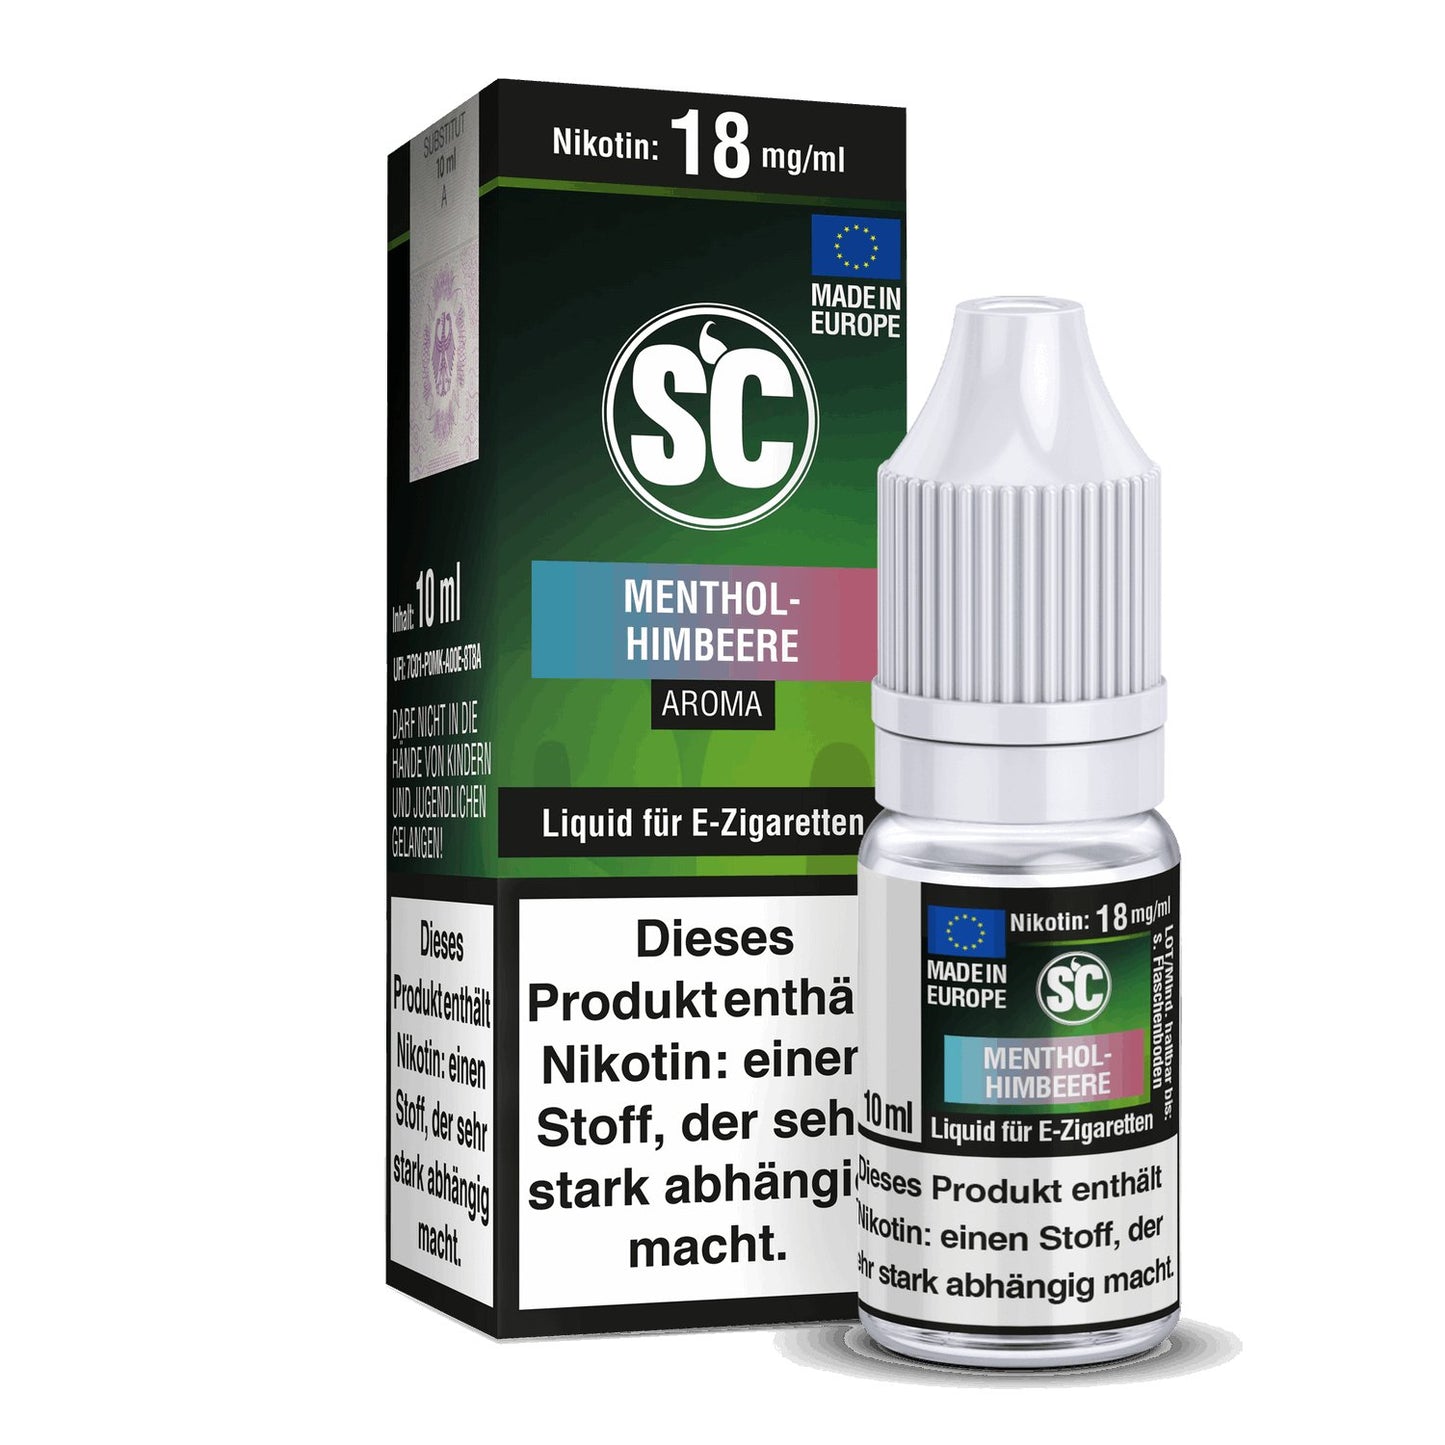 SC - Menthol-Himbeere - 10ml Fertigliquid (Nikotinfrei/Nikotin) - 1er Packung 0 mg/ml - Vapes4you